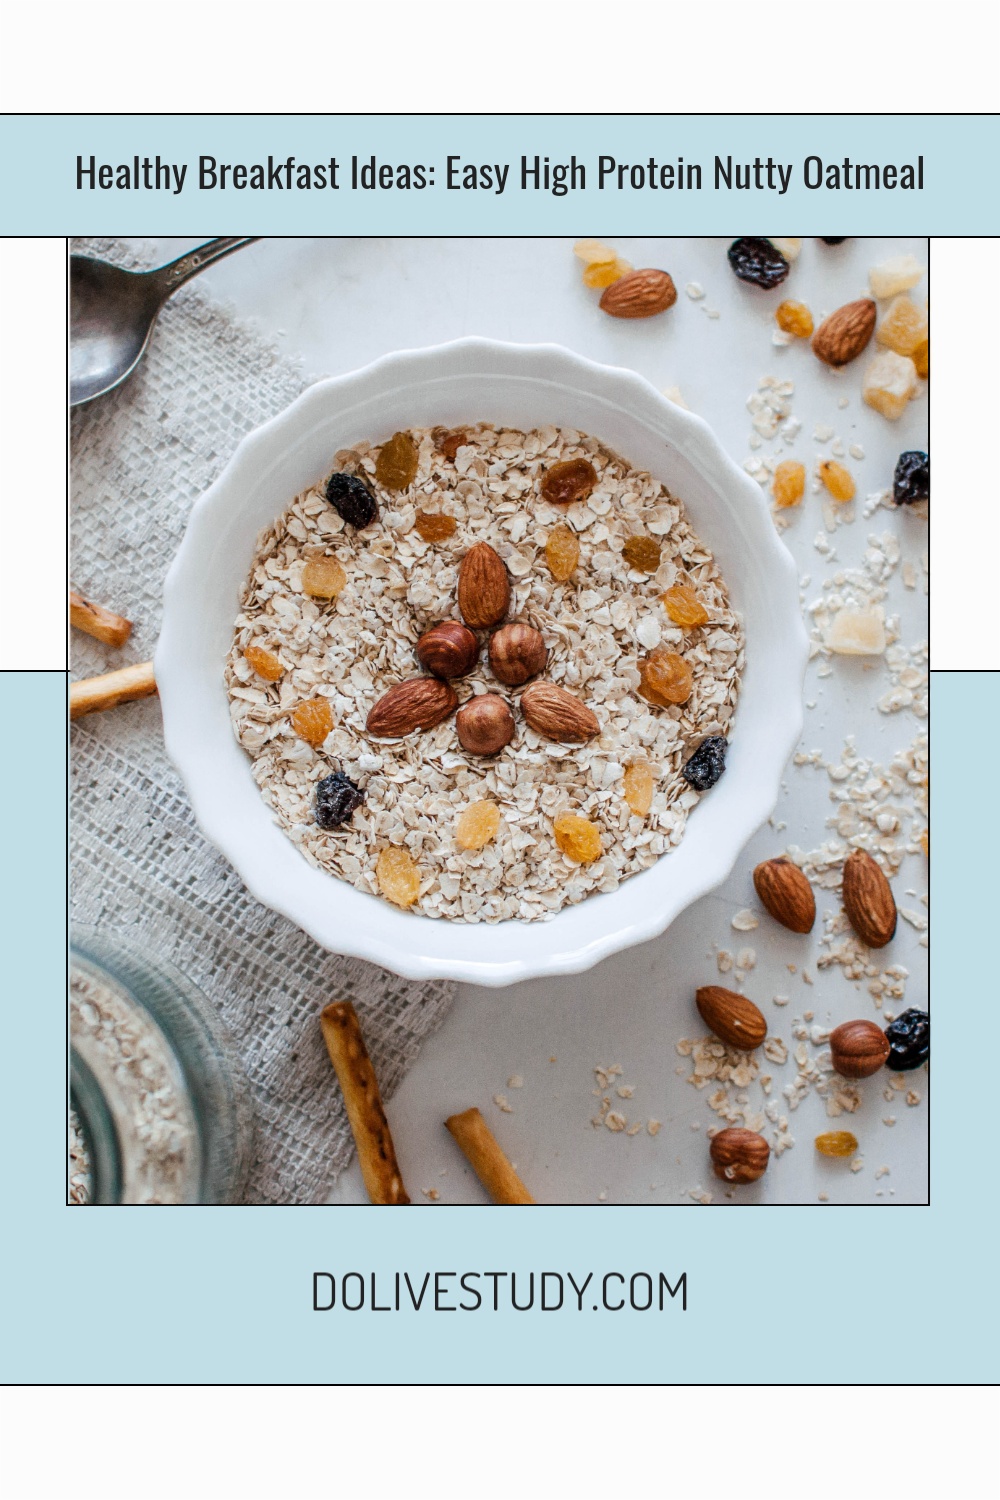 Healthy Breakfast Ideas  Easy High Protein Nutty Oatmeal5 - Healthy Breakfast Ideas: Easy High Protein Nutty Oatmeal